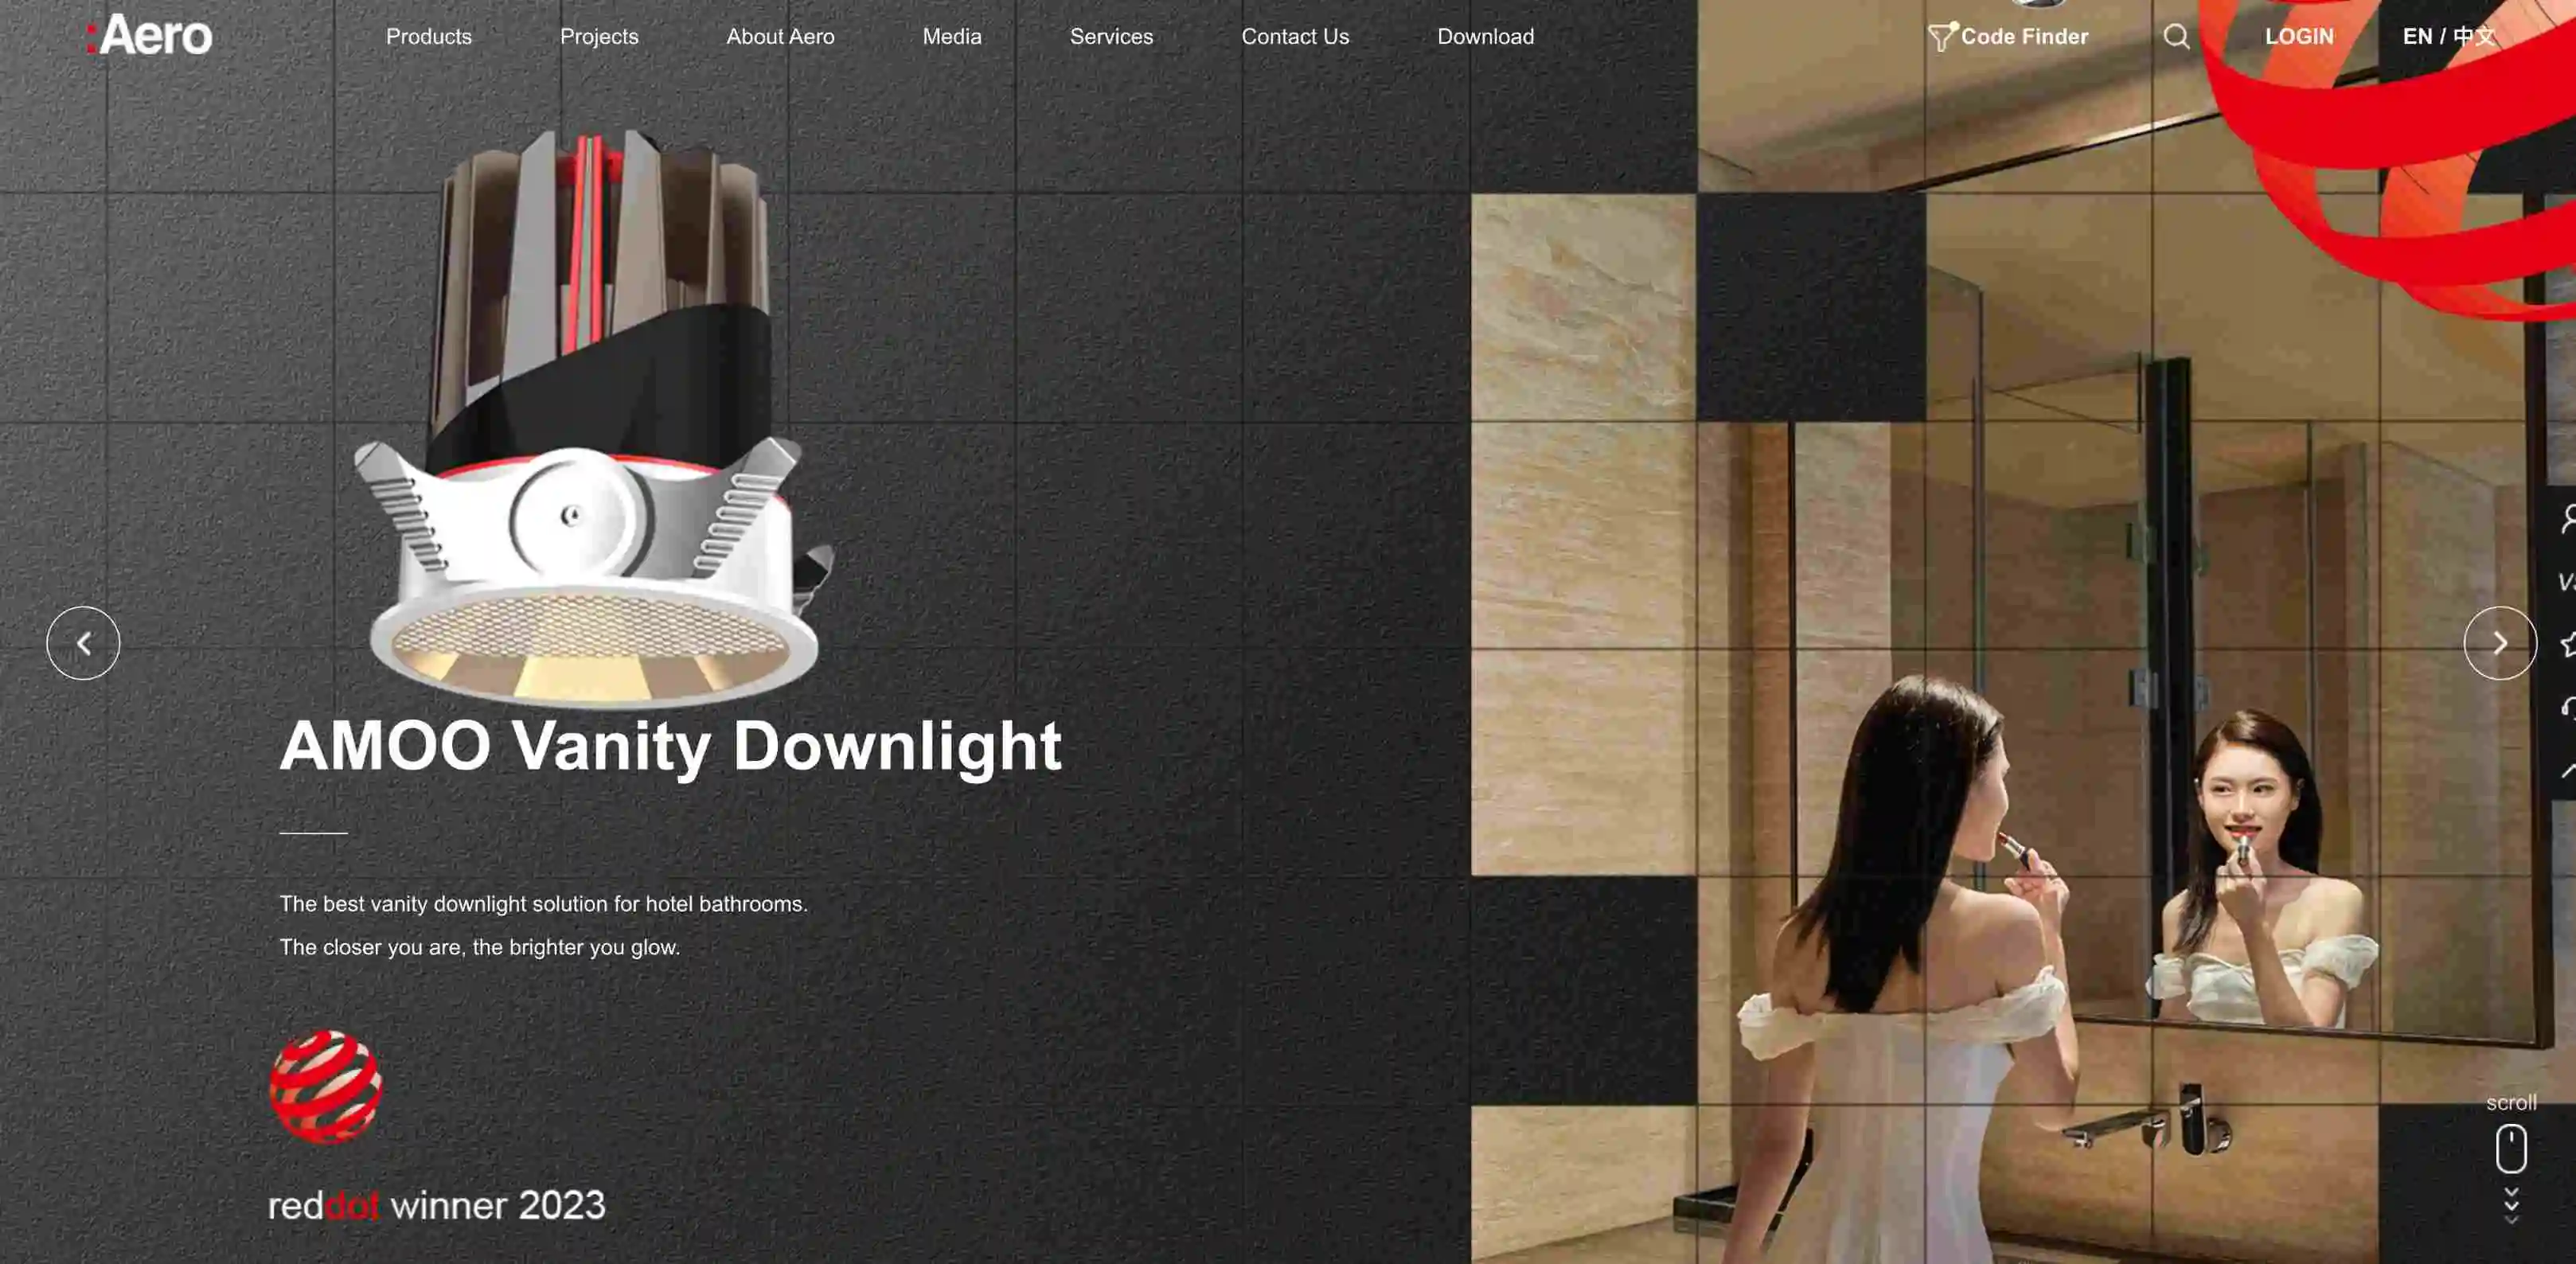 Website design for AMO Lighting showcasing modern and sleek Aero Light company products